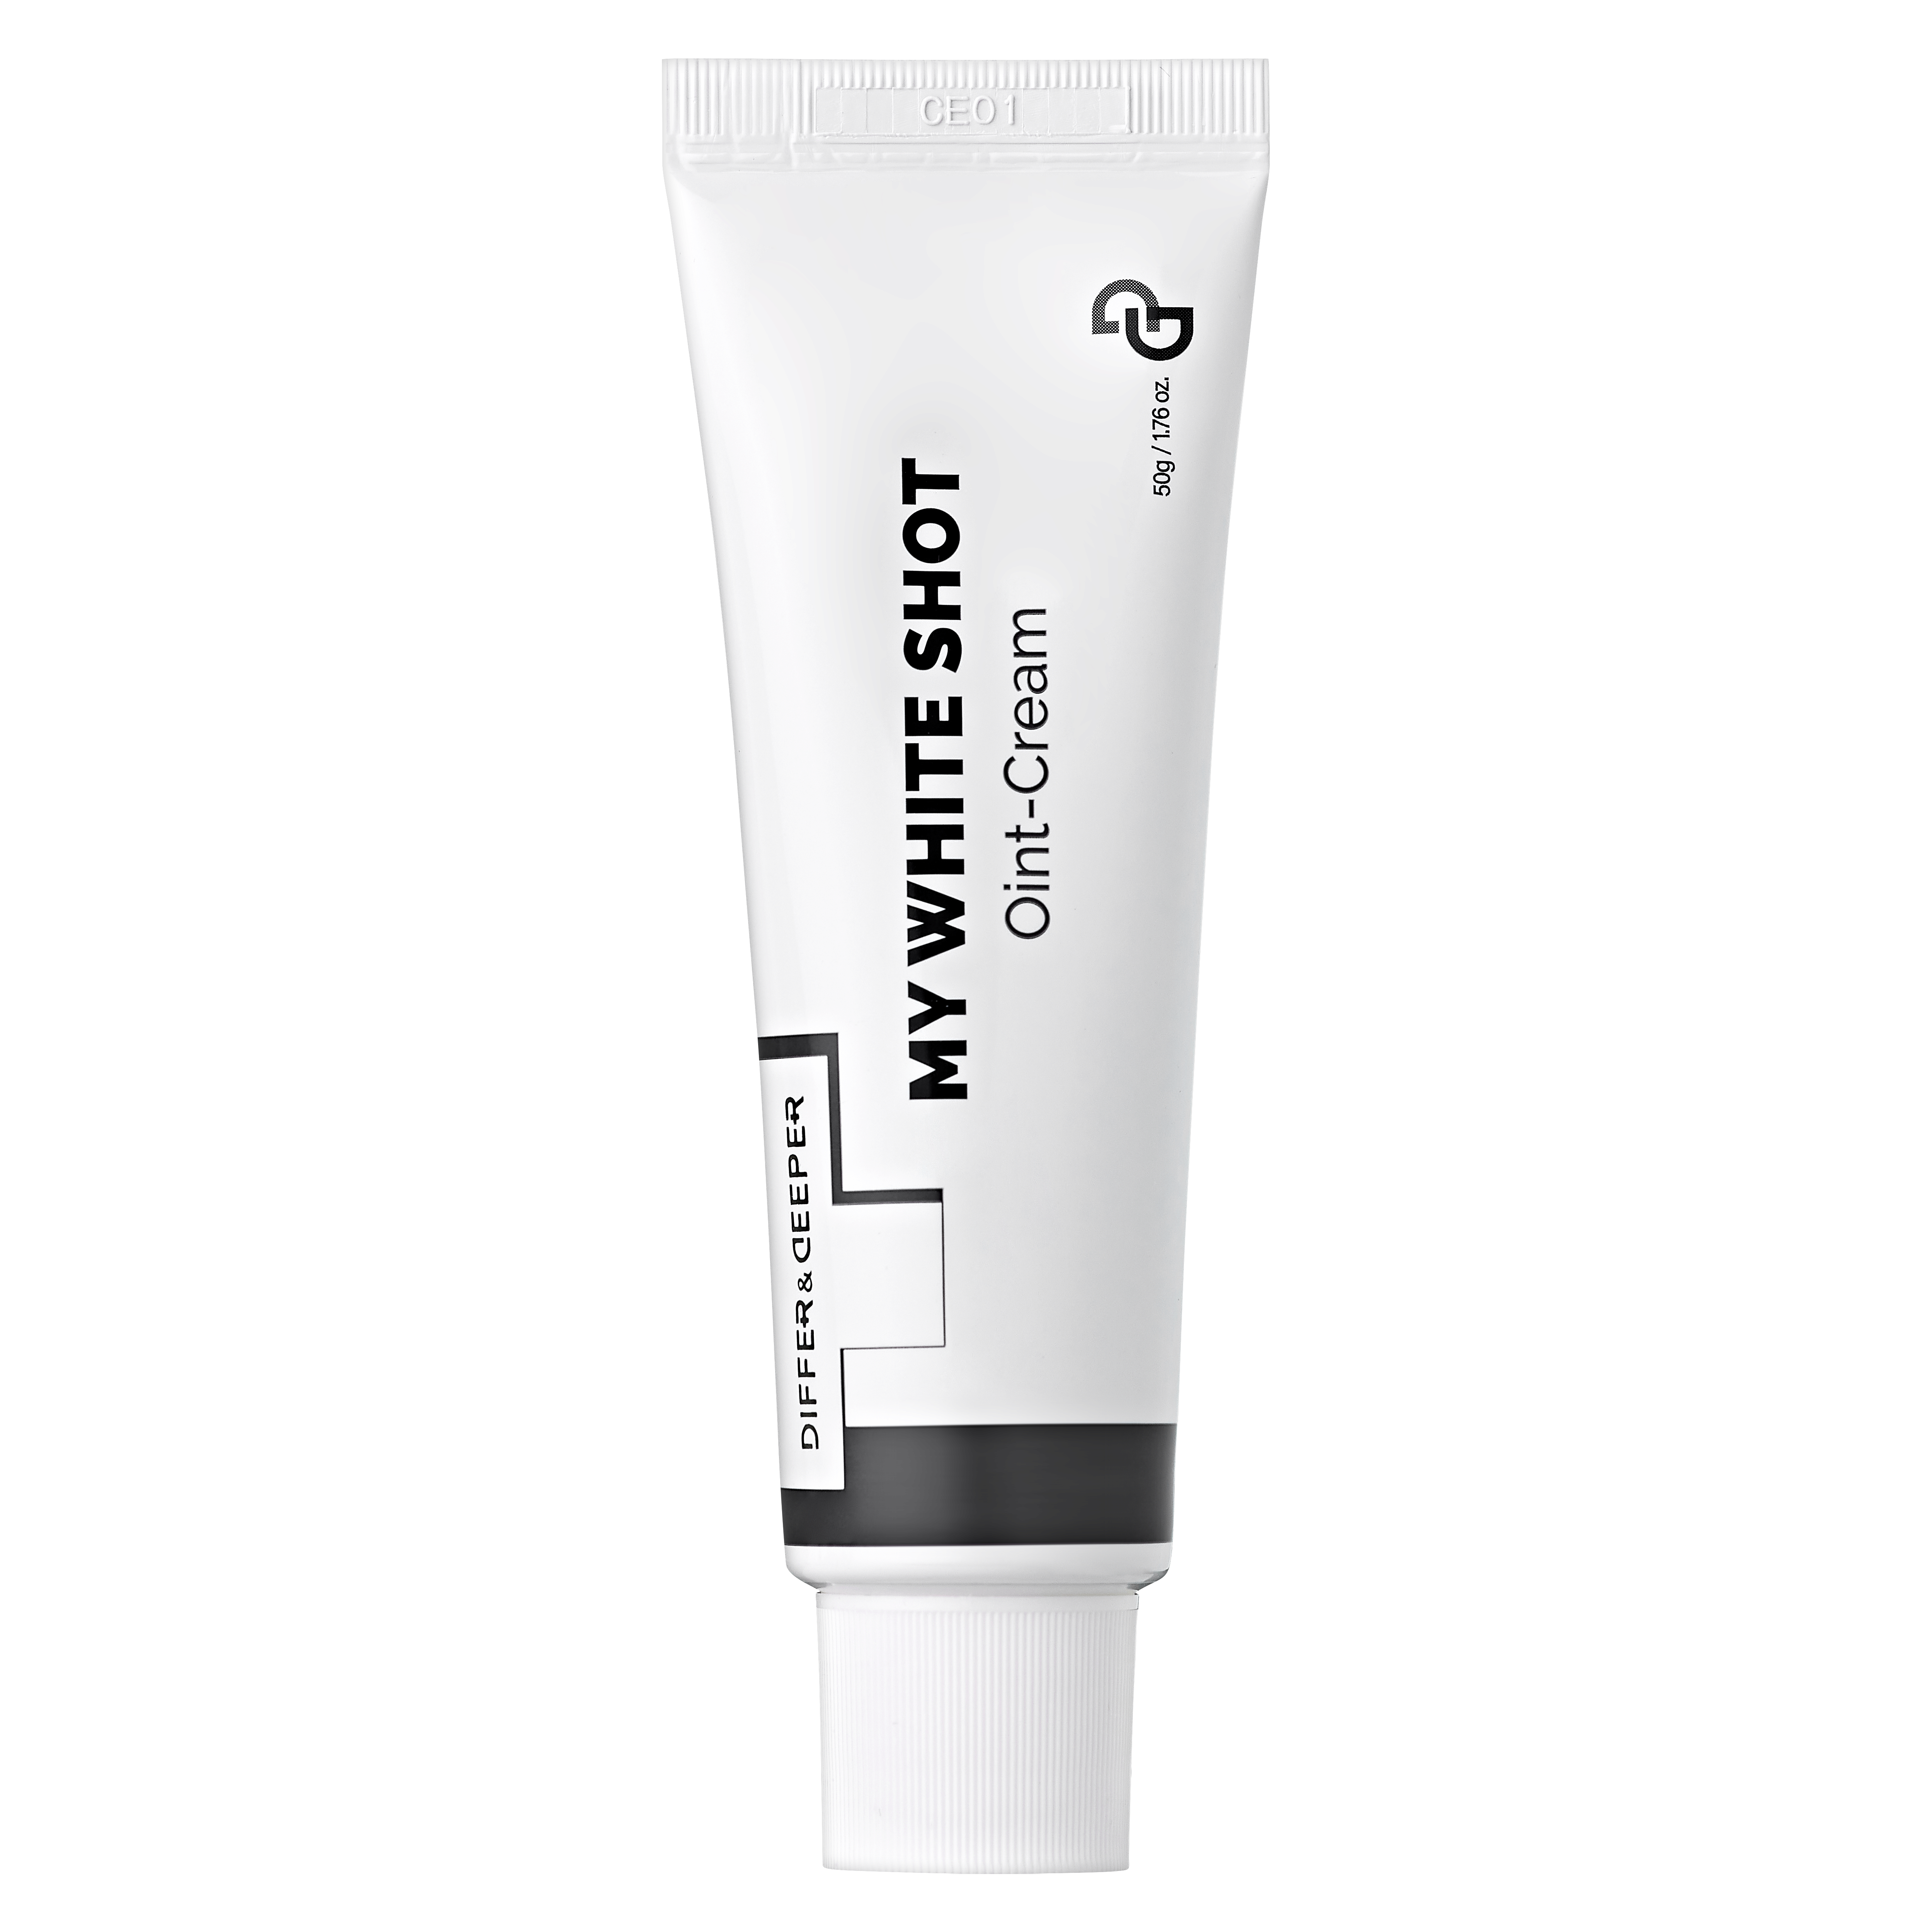 MY WHITE SHOT Oint_Cream whitening brightening korean cosmetics traneximic acid niacinamide darkspot